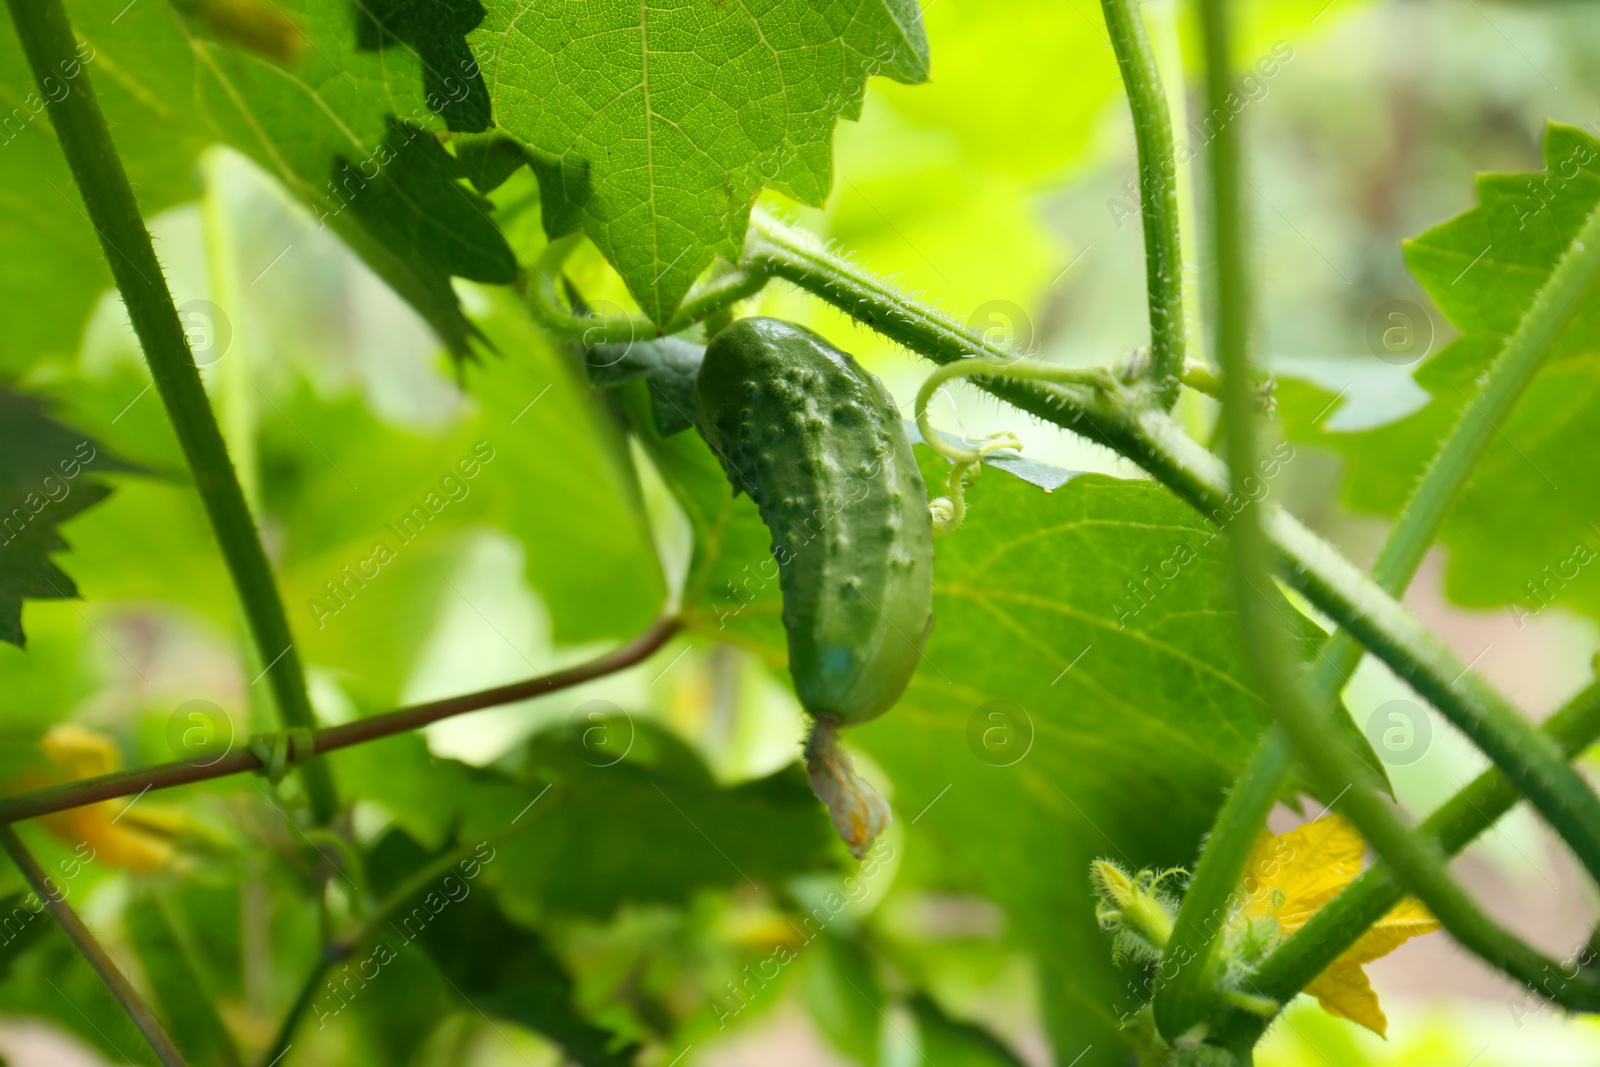 Photo of Cucumber ripening on bush in garden, closeup